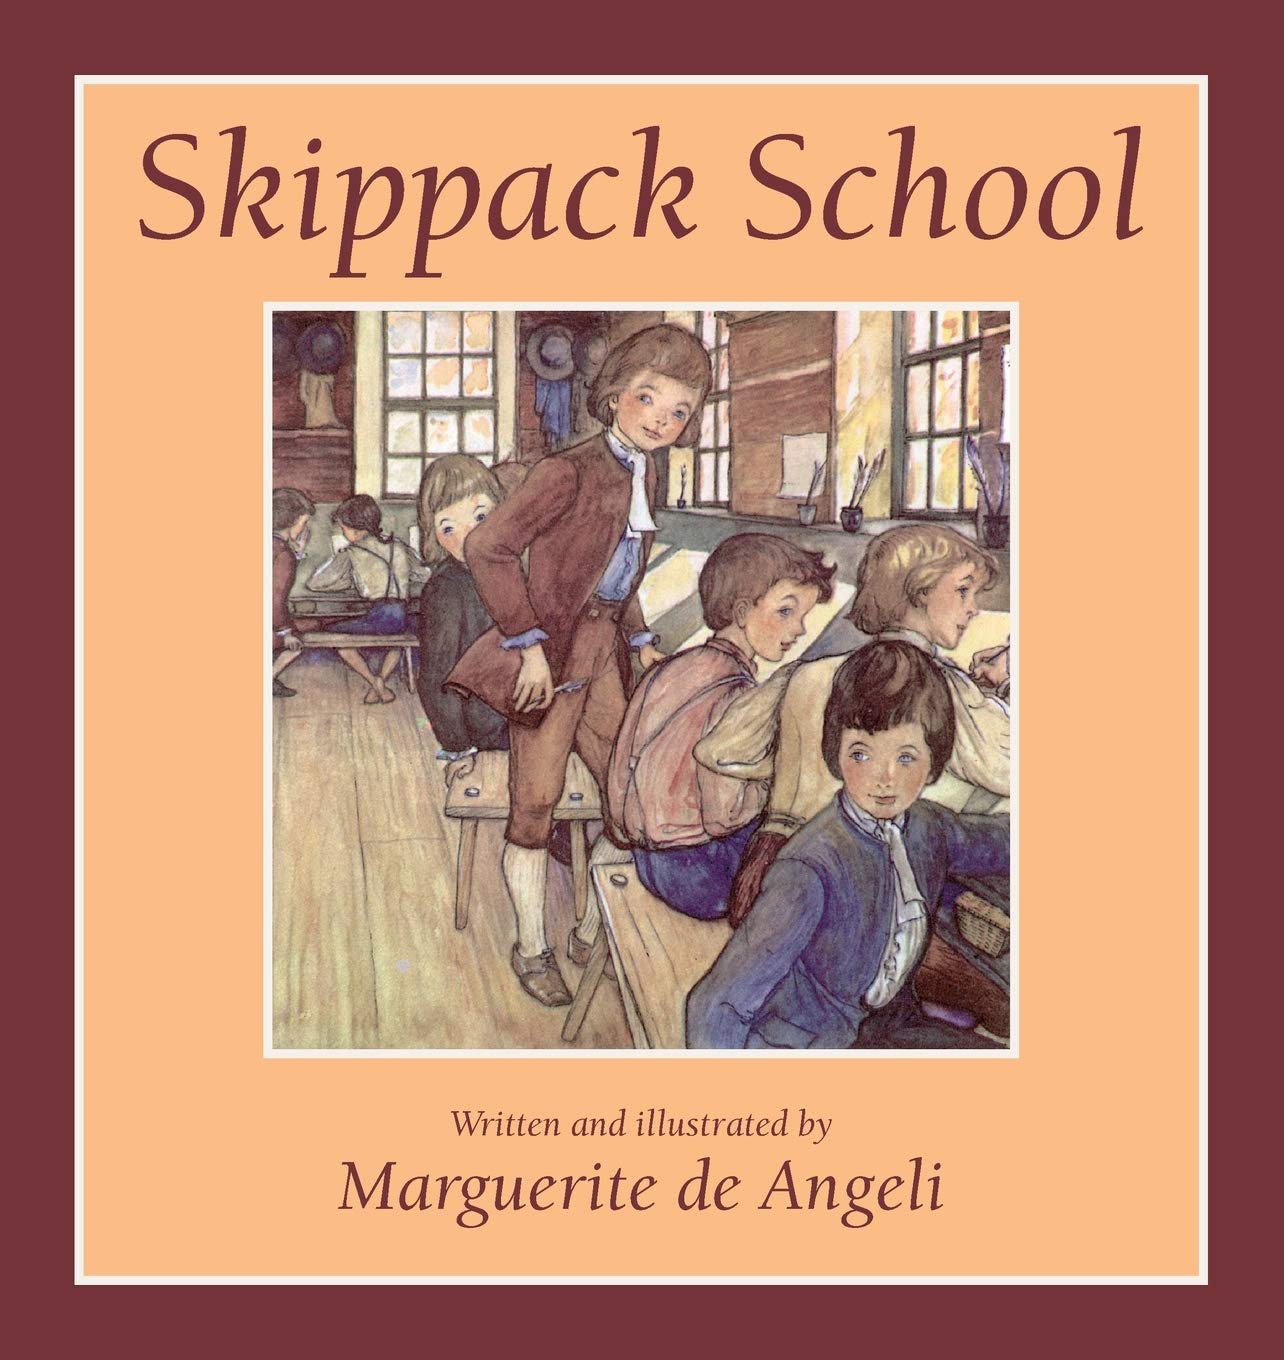 The Skippack School